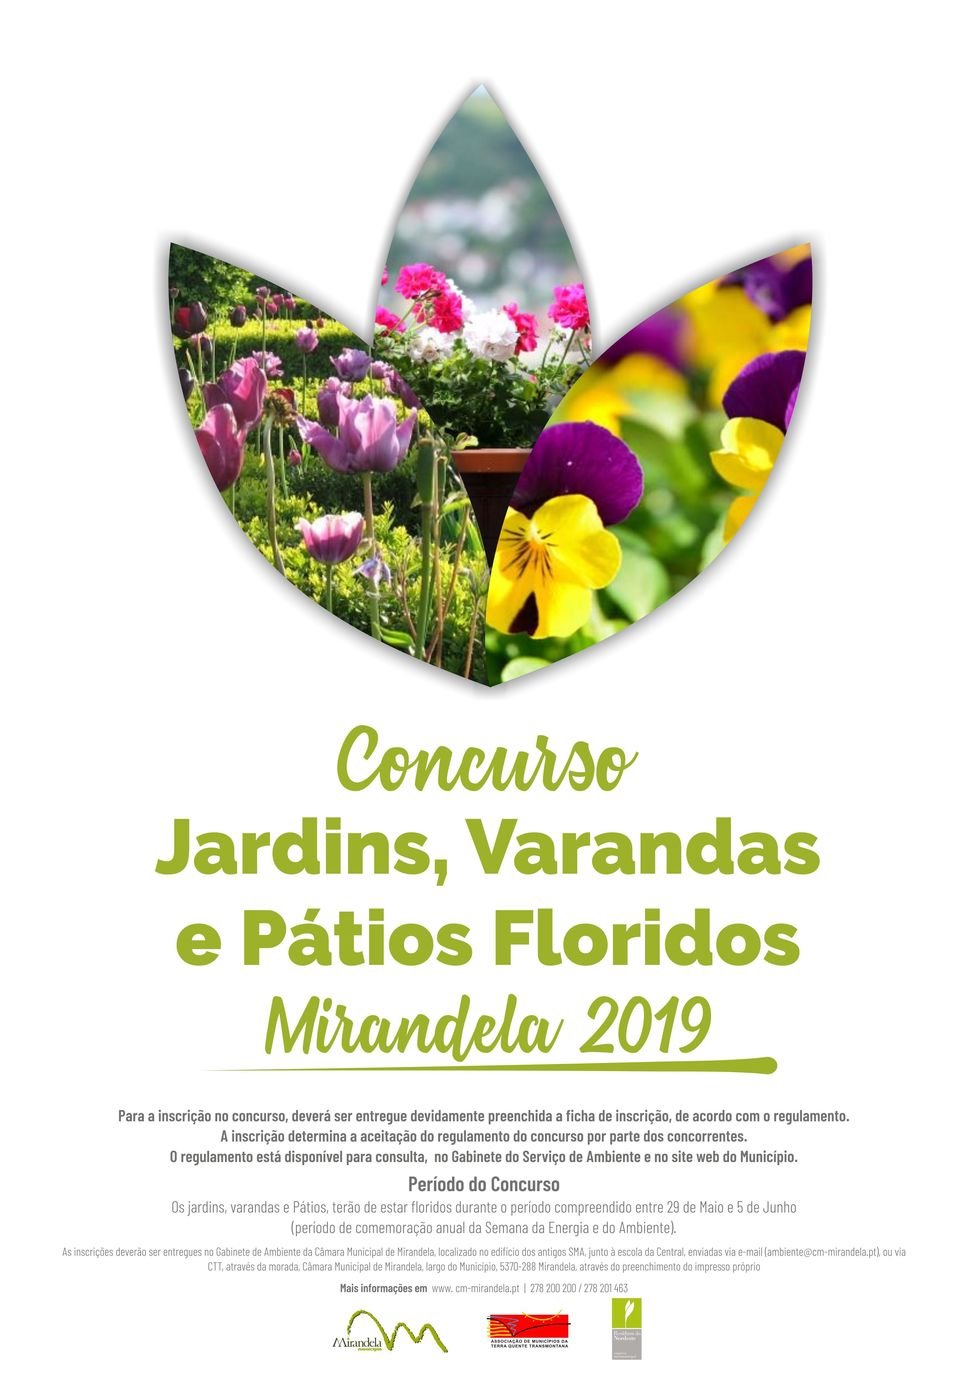 Concurso: Jardins, Varandas e Janelas Floridas